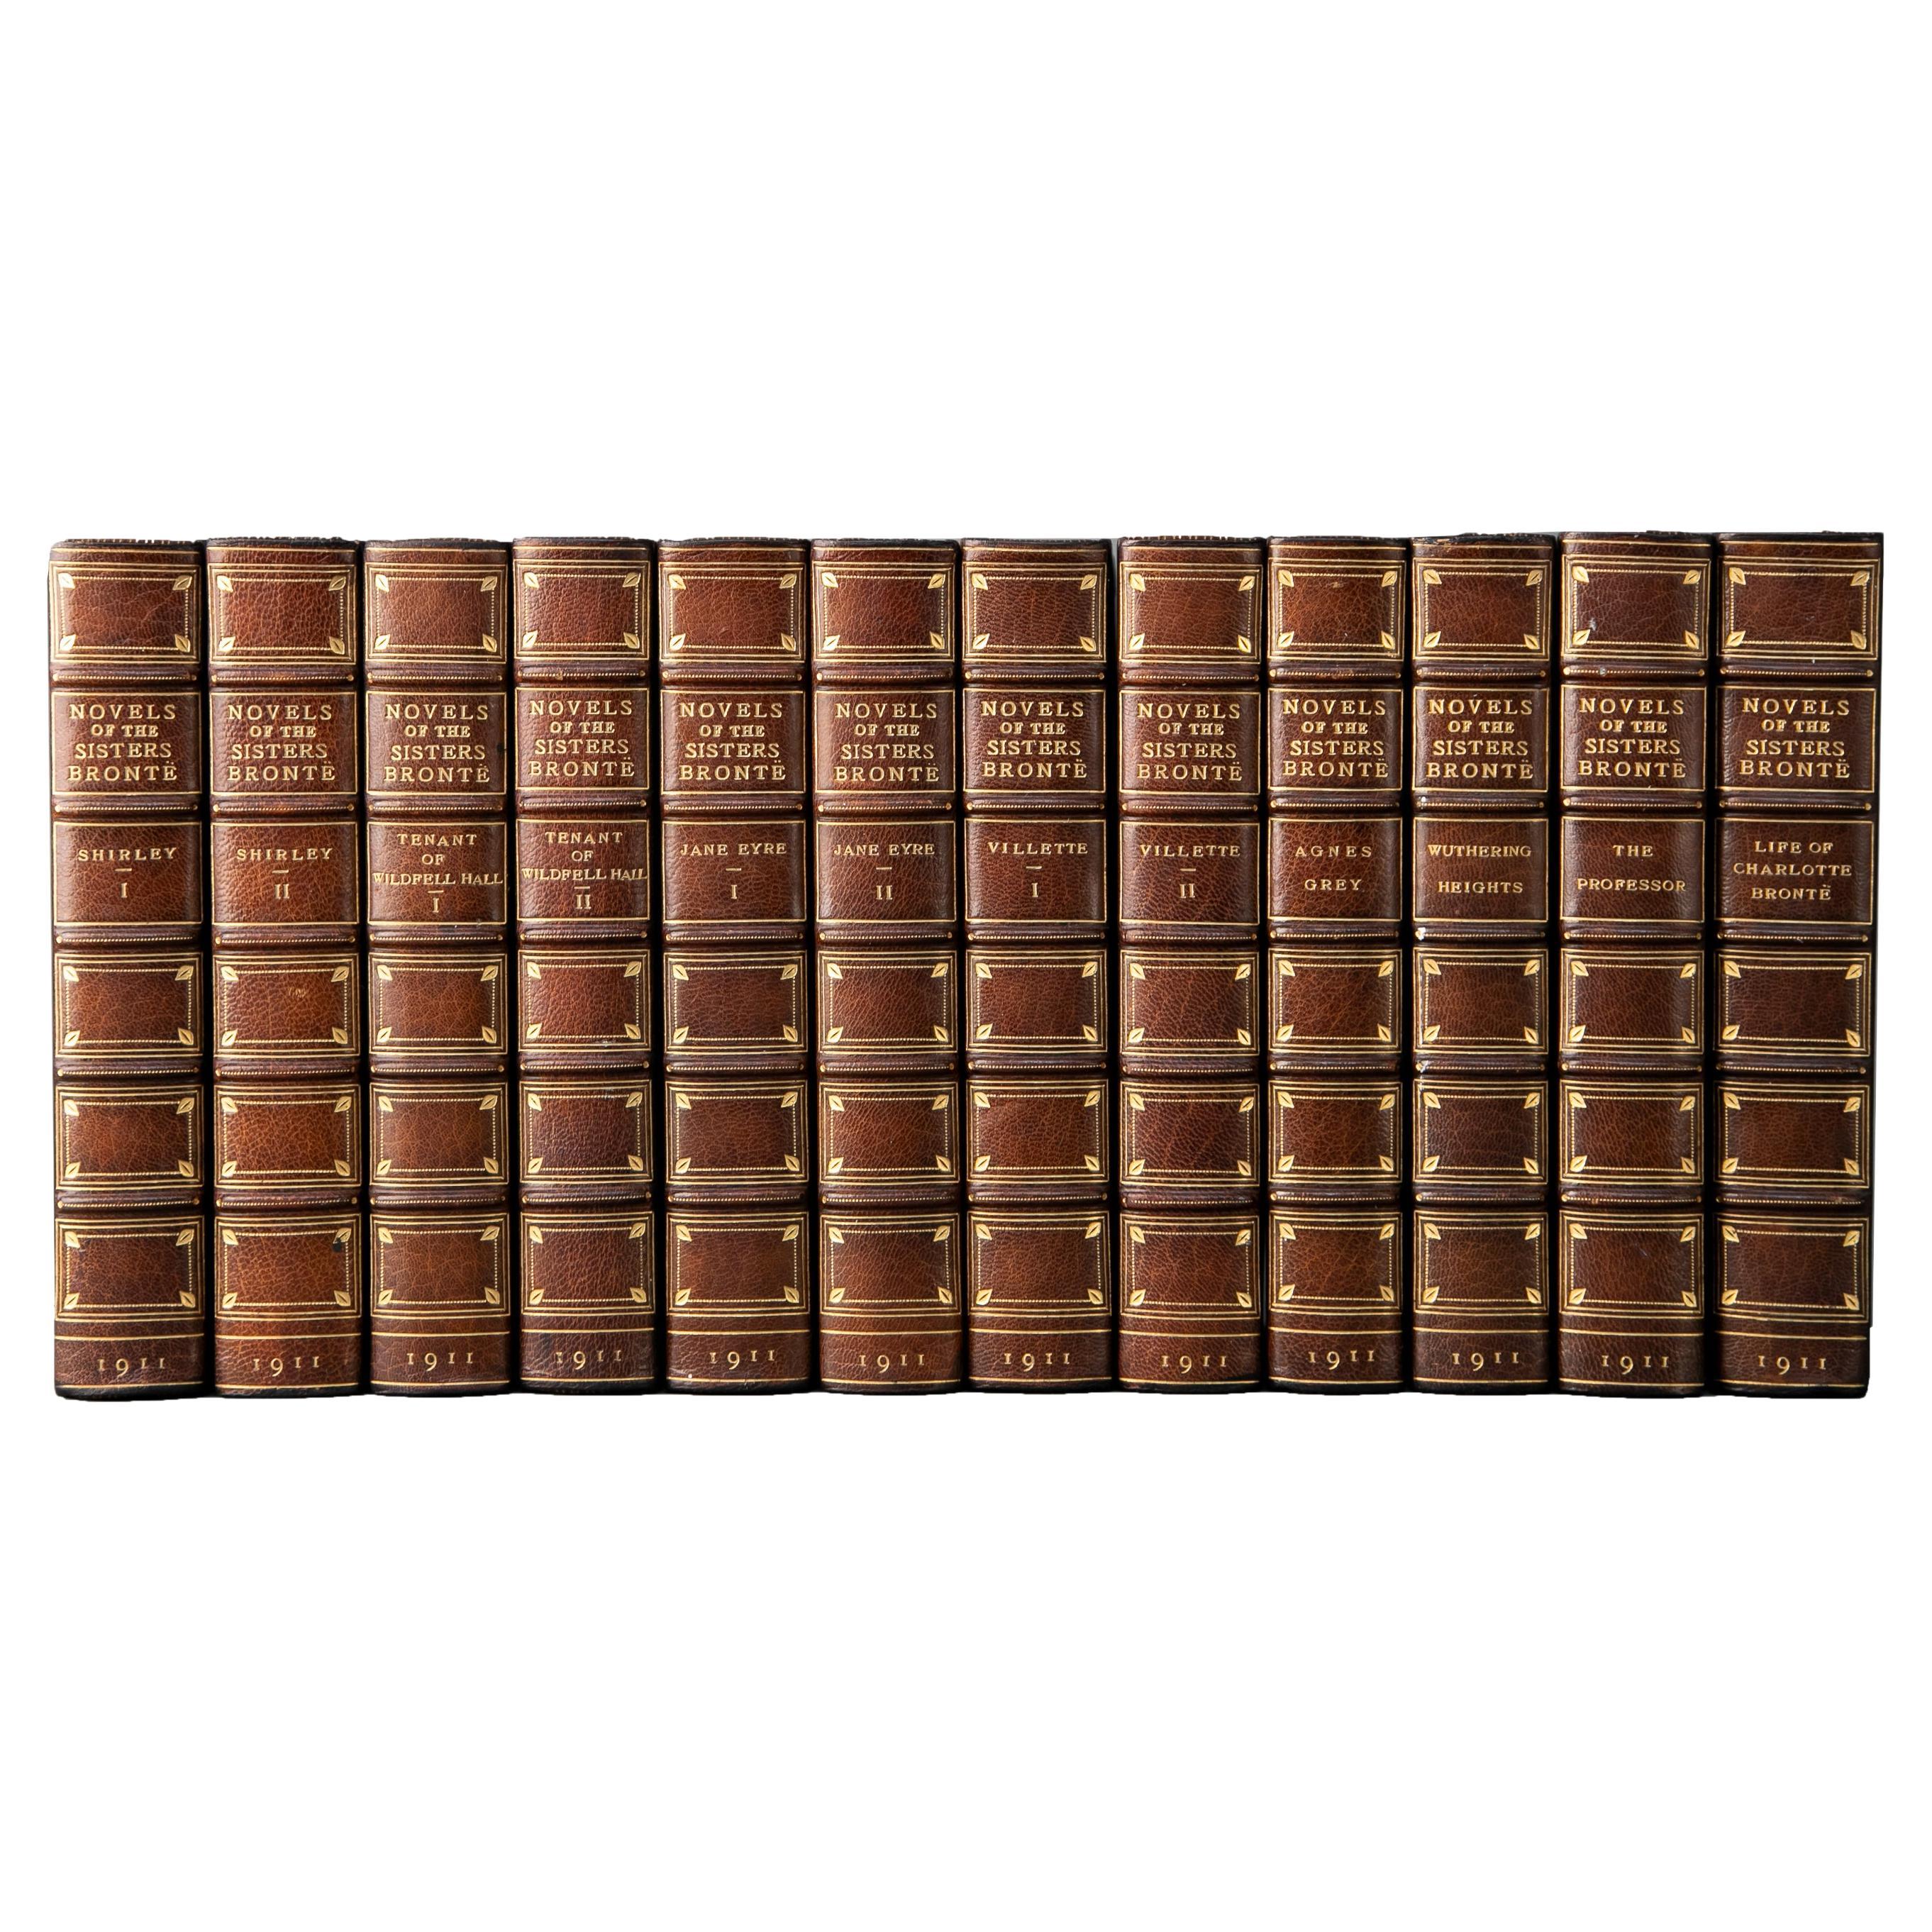 12 Volumes. The Brontë Sisters, Novels. For Sale